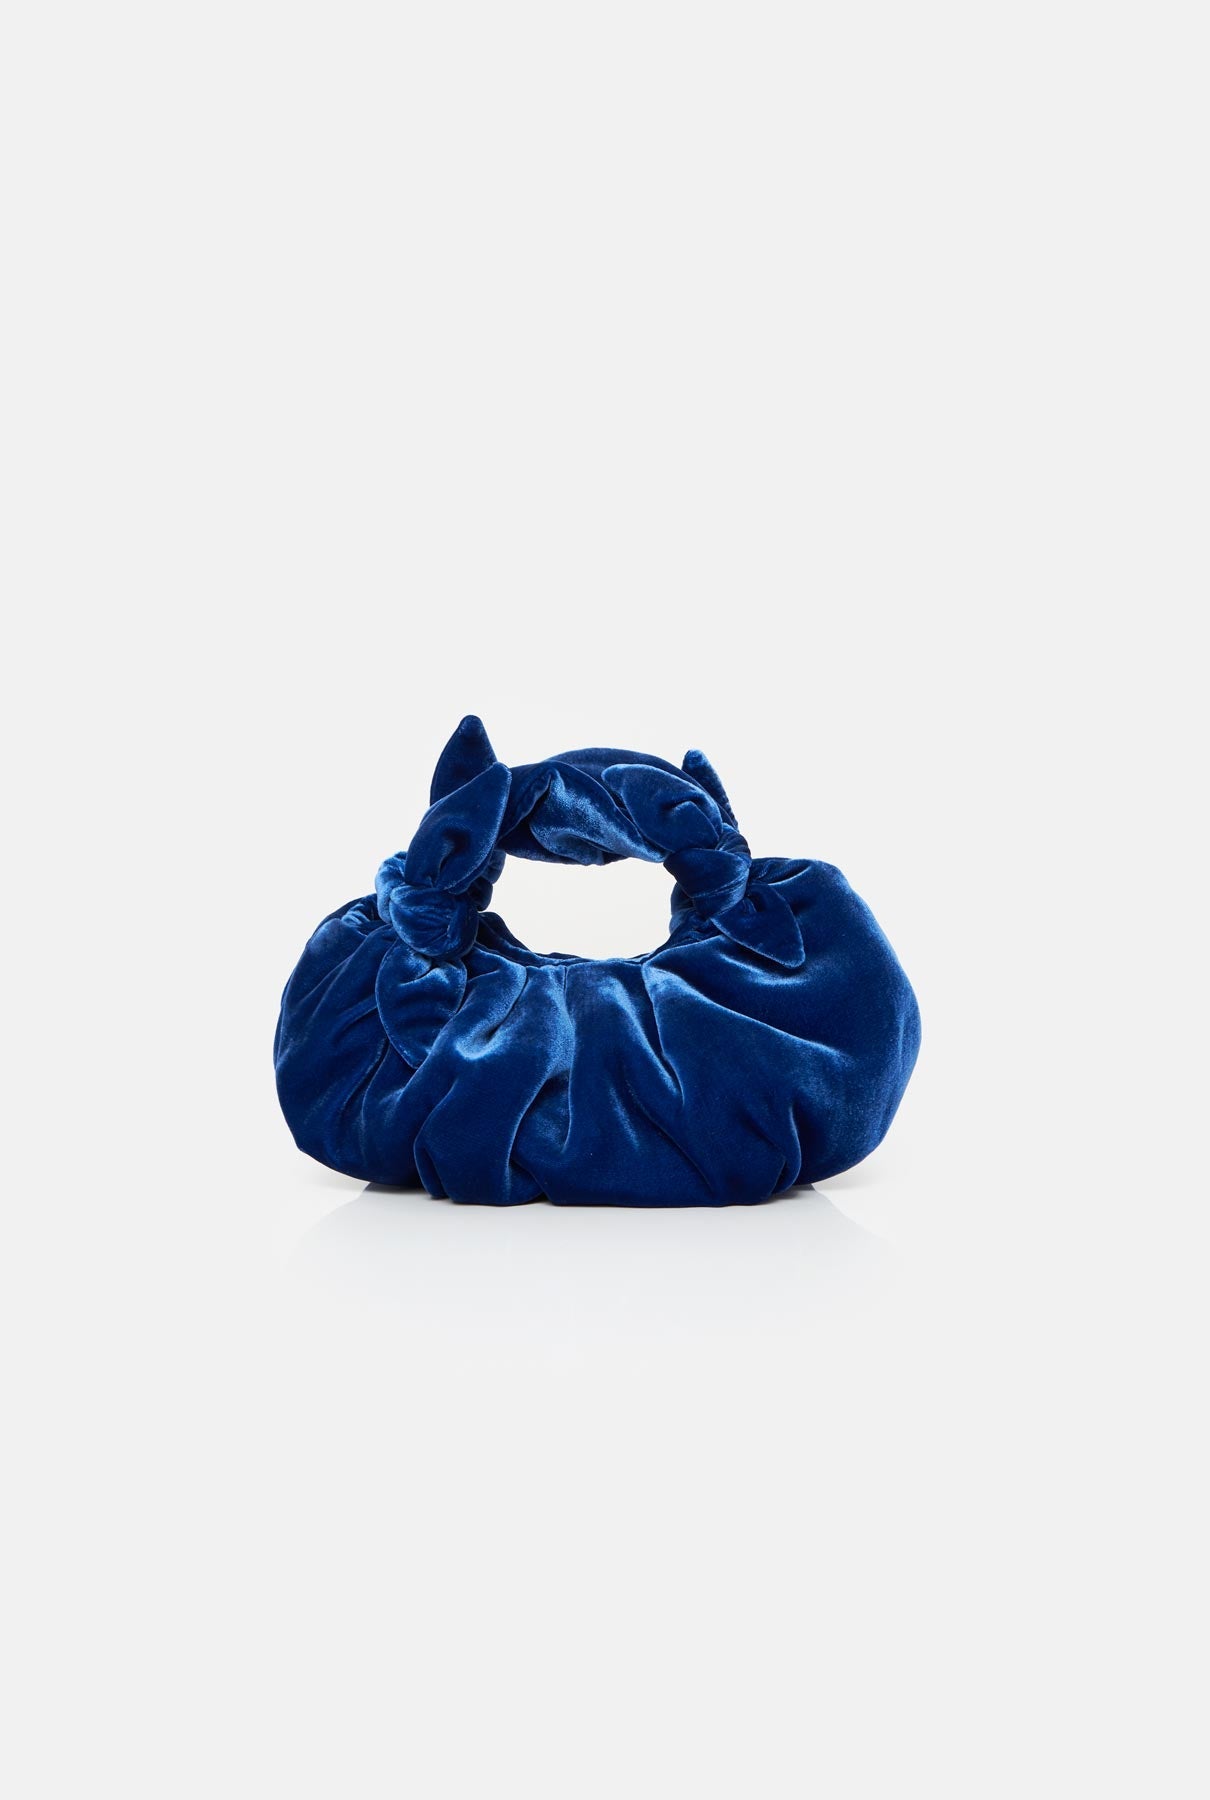 Bernatta velvet blue Mini bags Laia Alen 